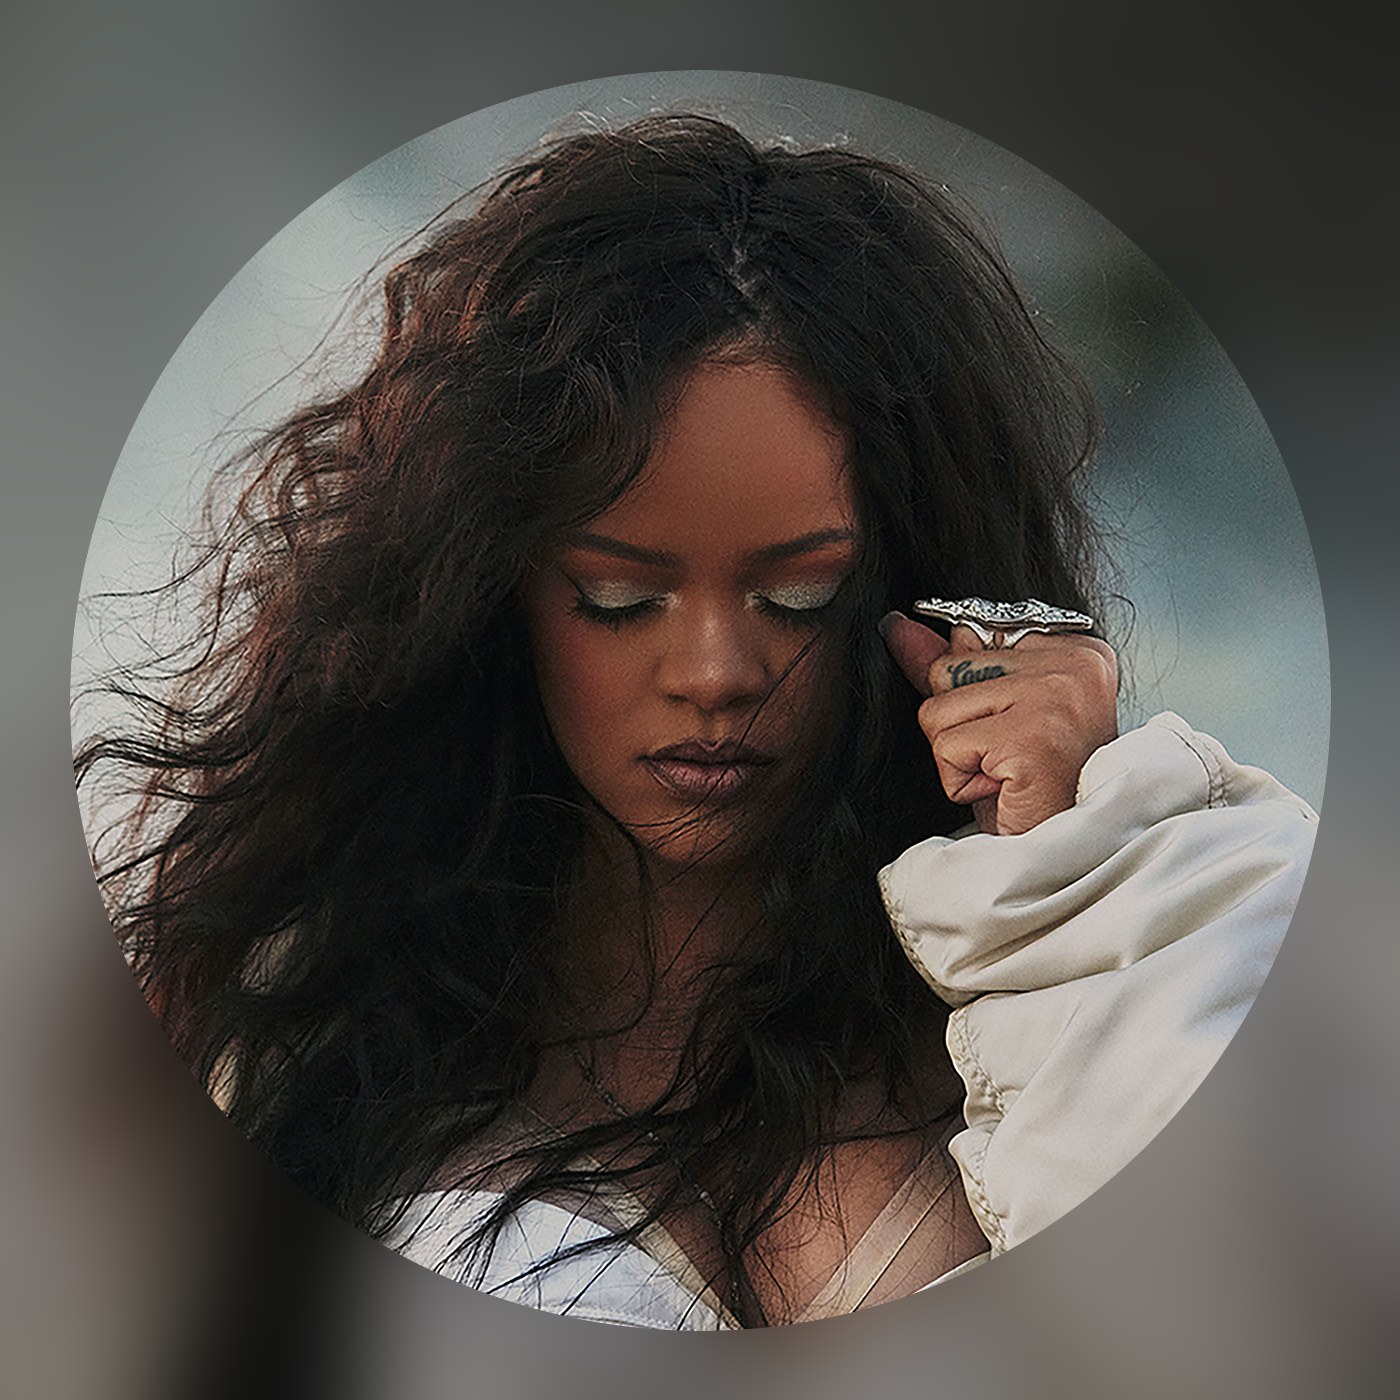 Rihanna Radio Listen To Free Music And Get The Latest Info Iheartradio